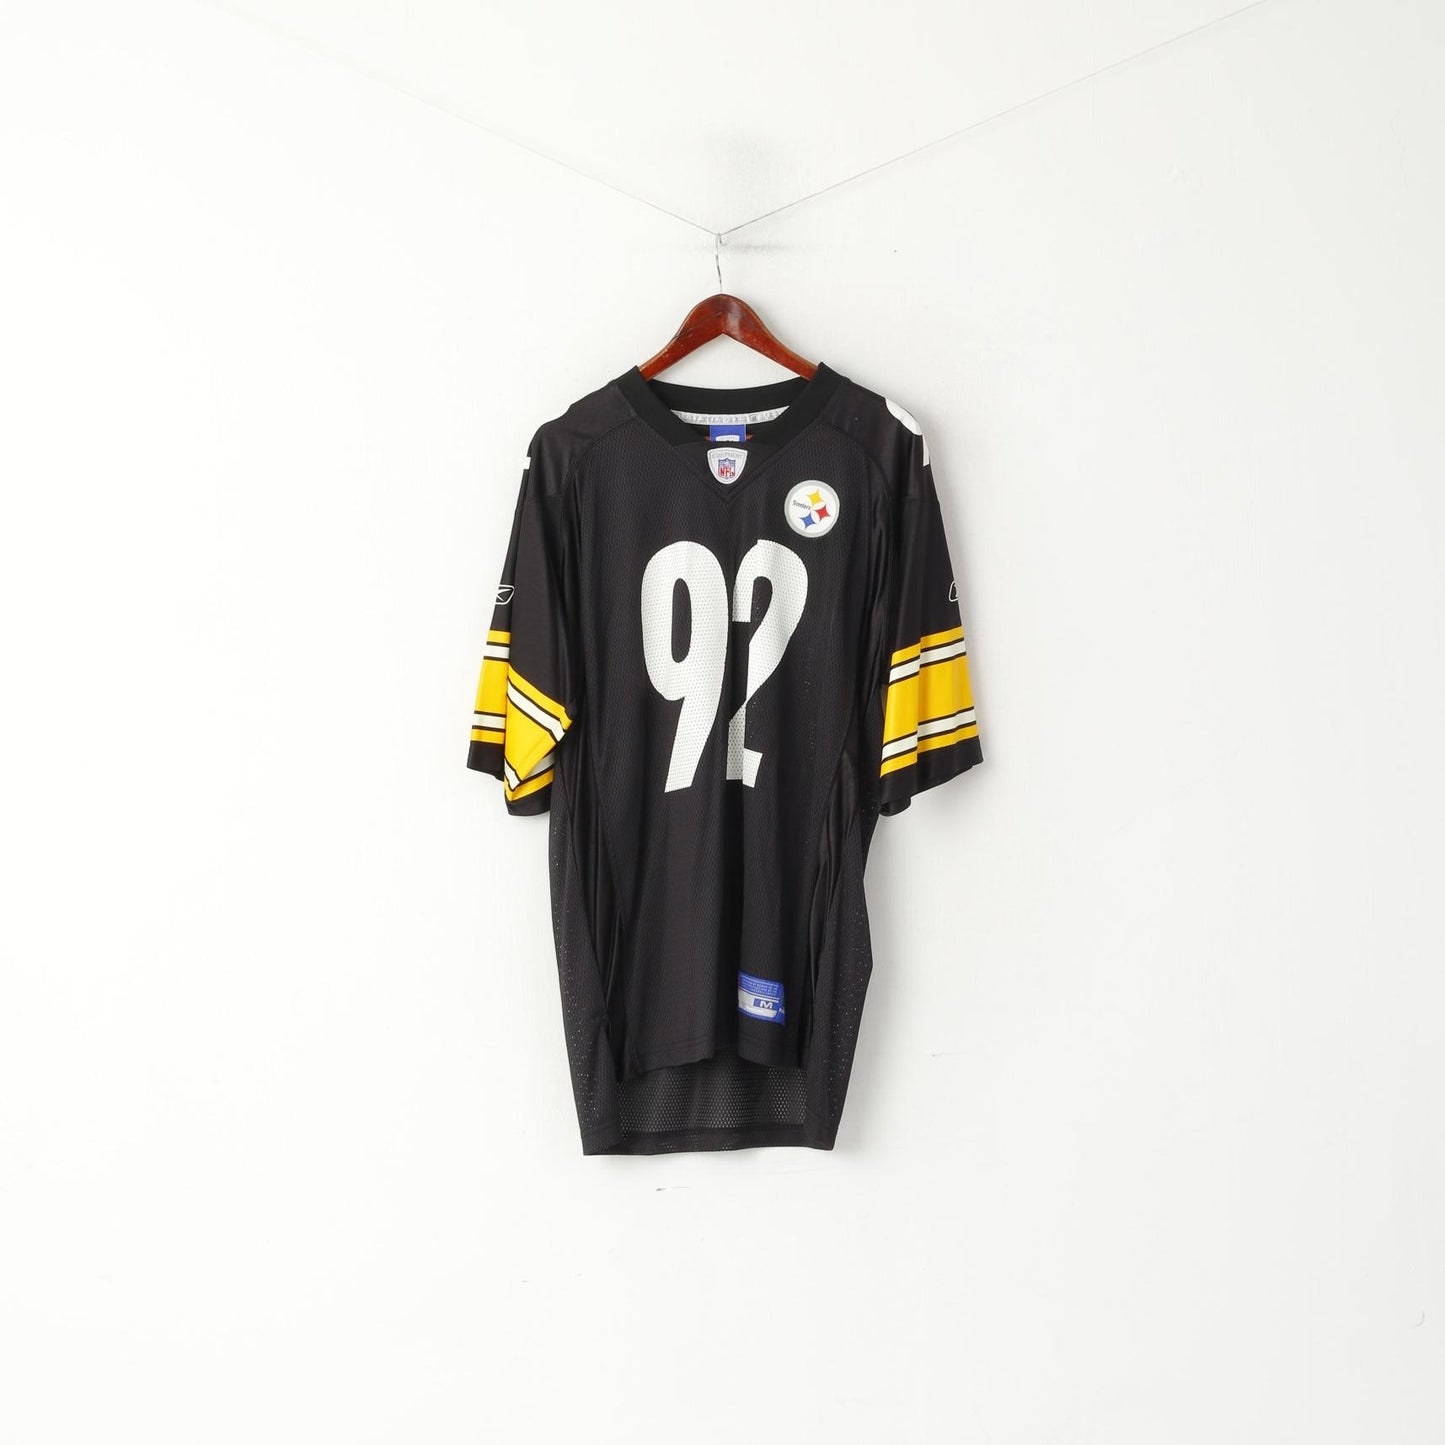 Reebok NFL Men M Shirt Black Nylon Mesh Steelers League 92 Gildon Jersey Top